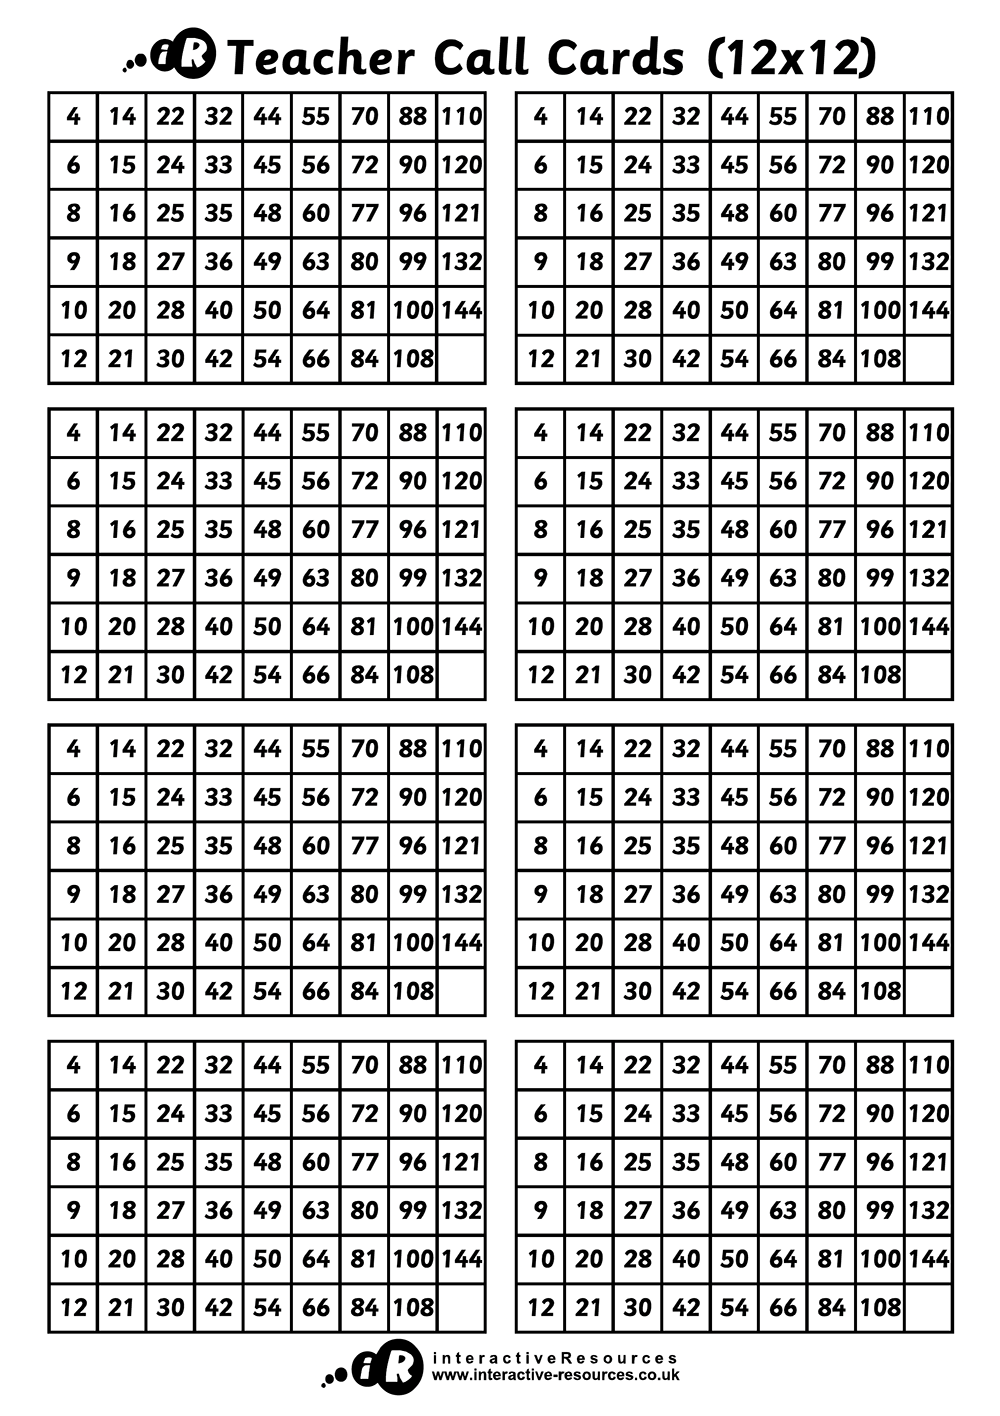 Times Tables Bingo Cards for Teachers